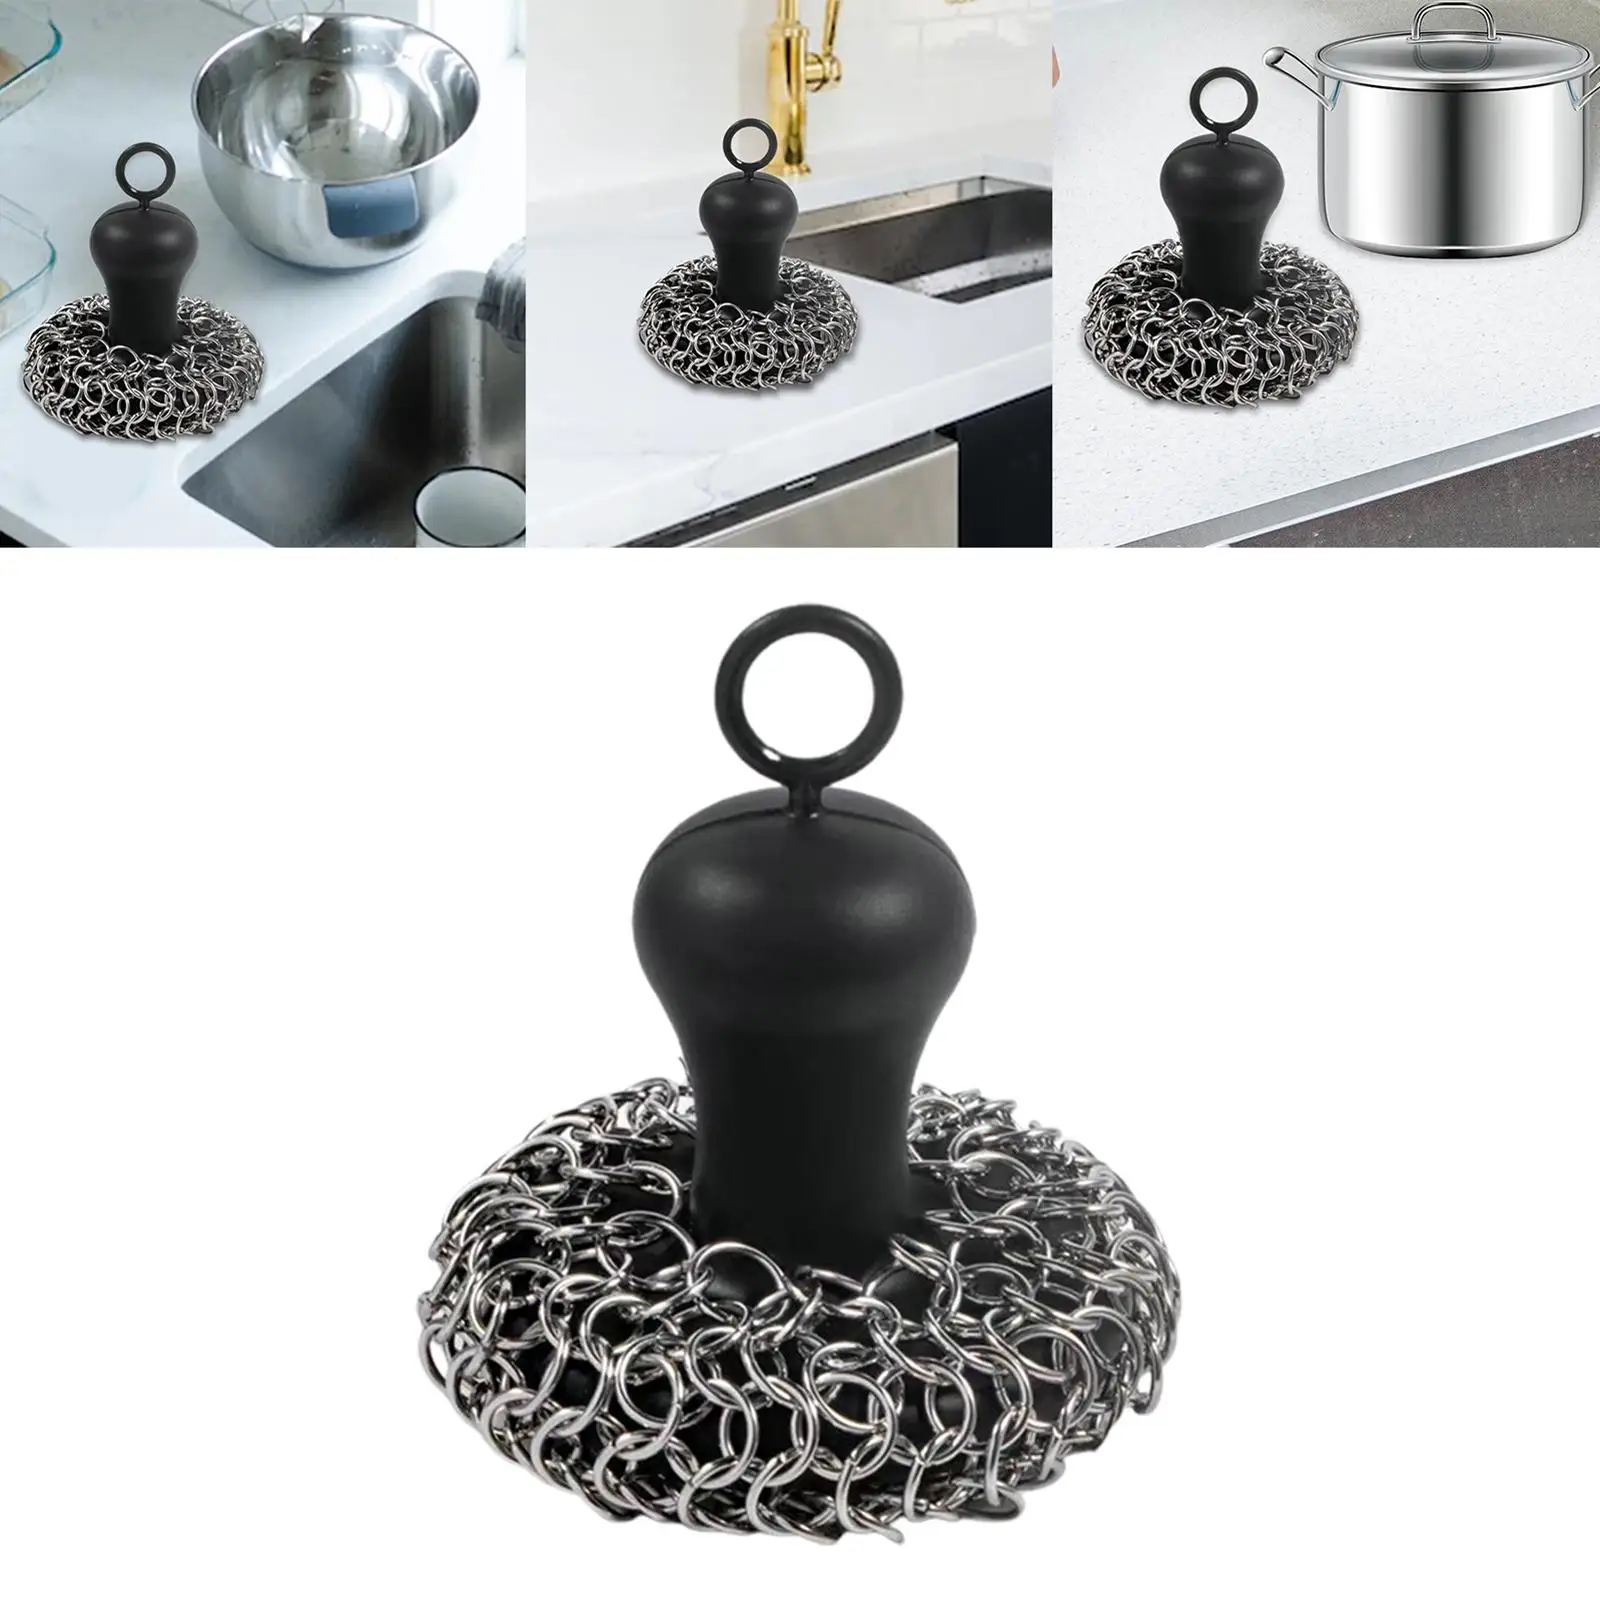 316 Stainless Steel Dishwashing Brush Dish Scrubber with Handle Pot Brush Dish Cleaning Ball for Pot Kitchen Pan Utensils Bowl